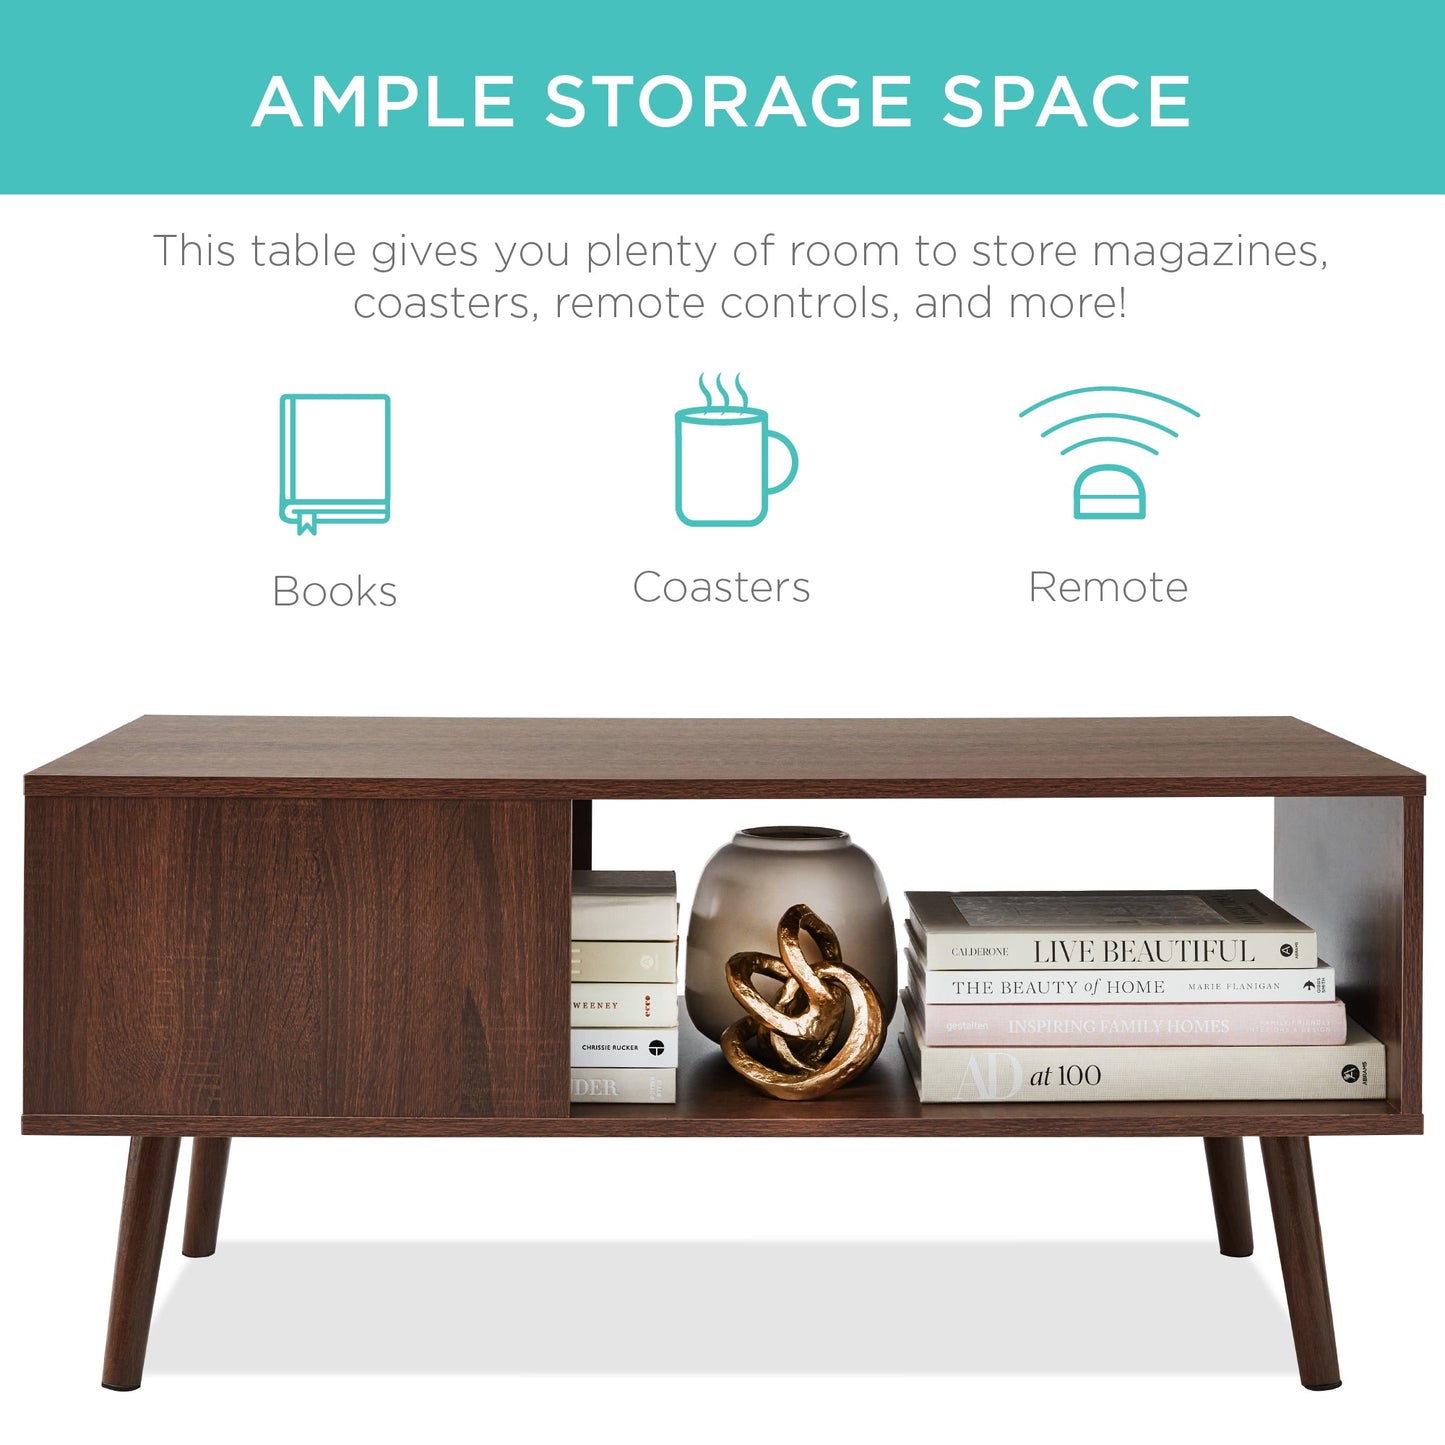 Wooden Mid-Century Modern Coffee Accent Table w/ Open Storage Shelf